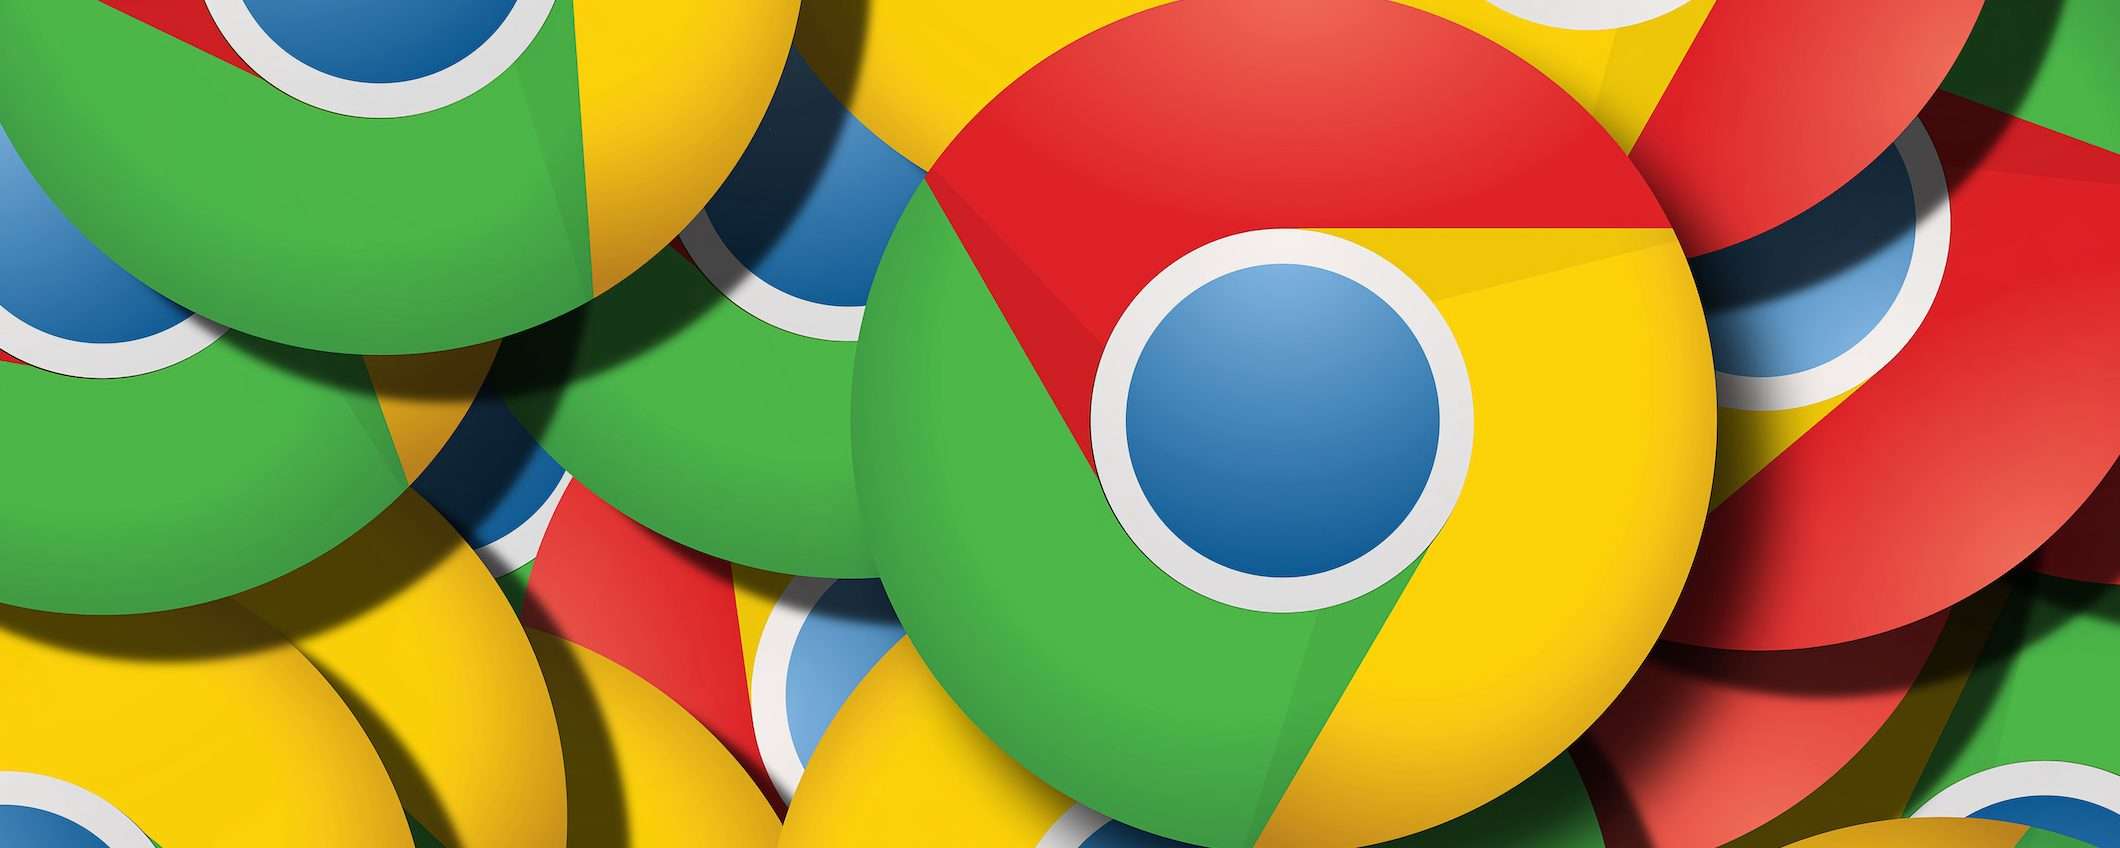 Google Chrome 111 bloccherà i download HTTP